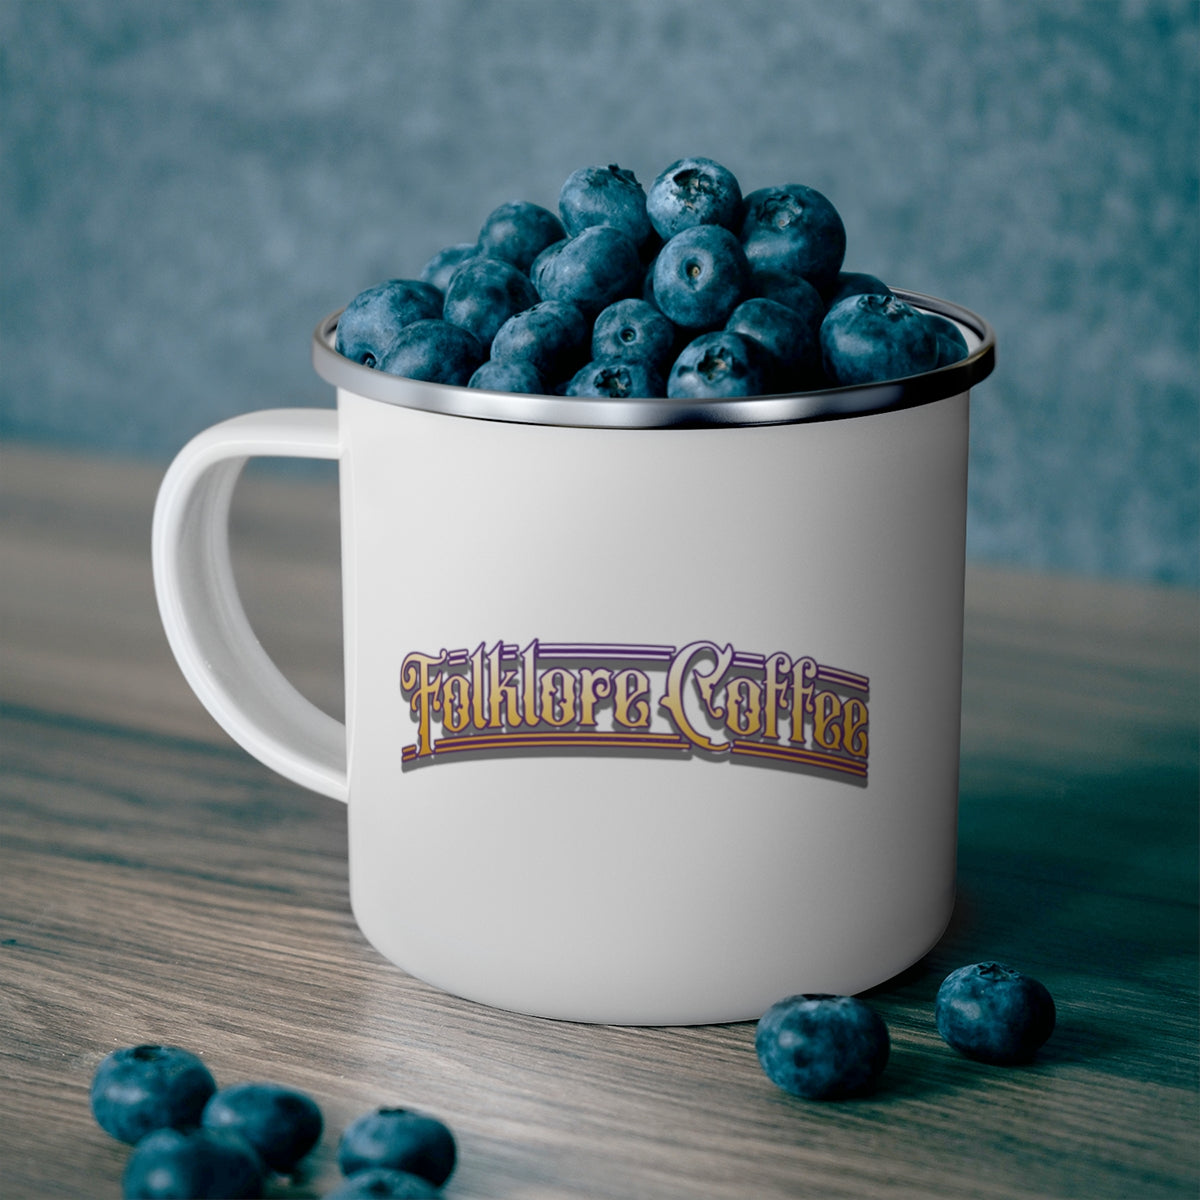 Stainless Enamel 12oz Coffee Mug